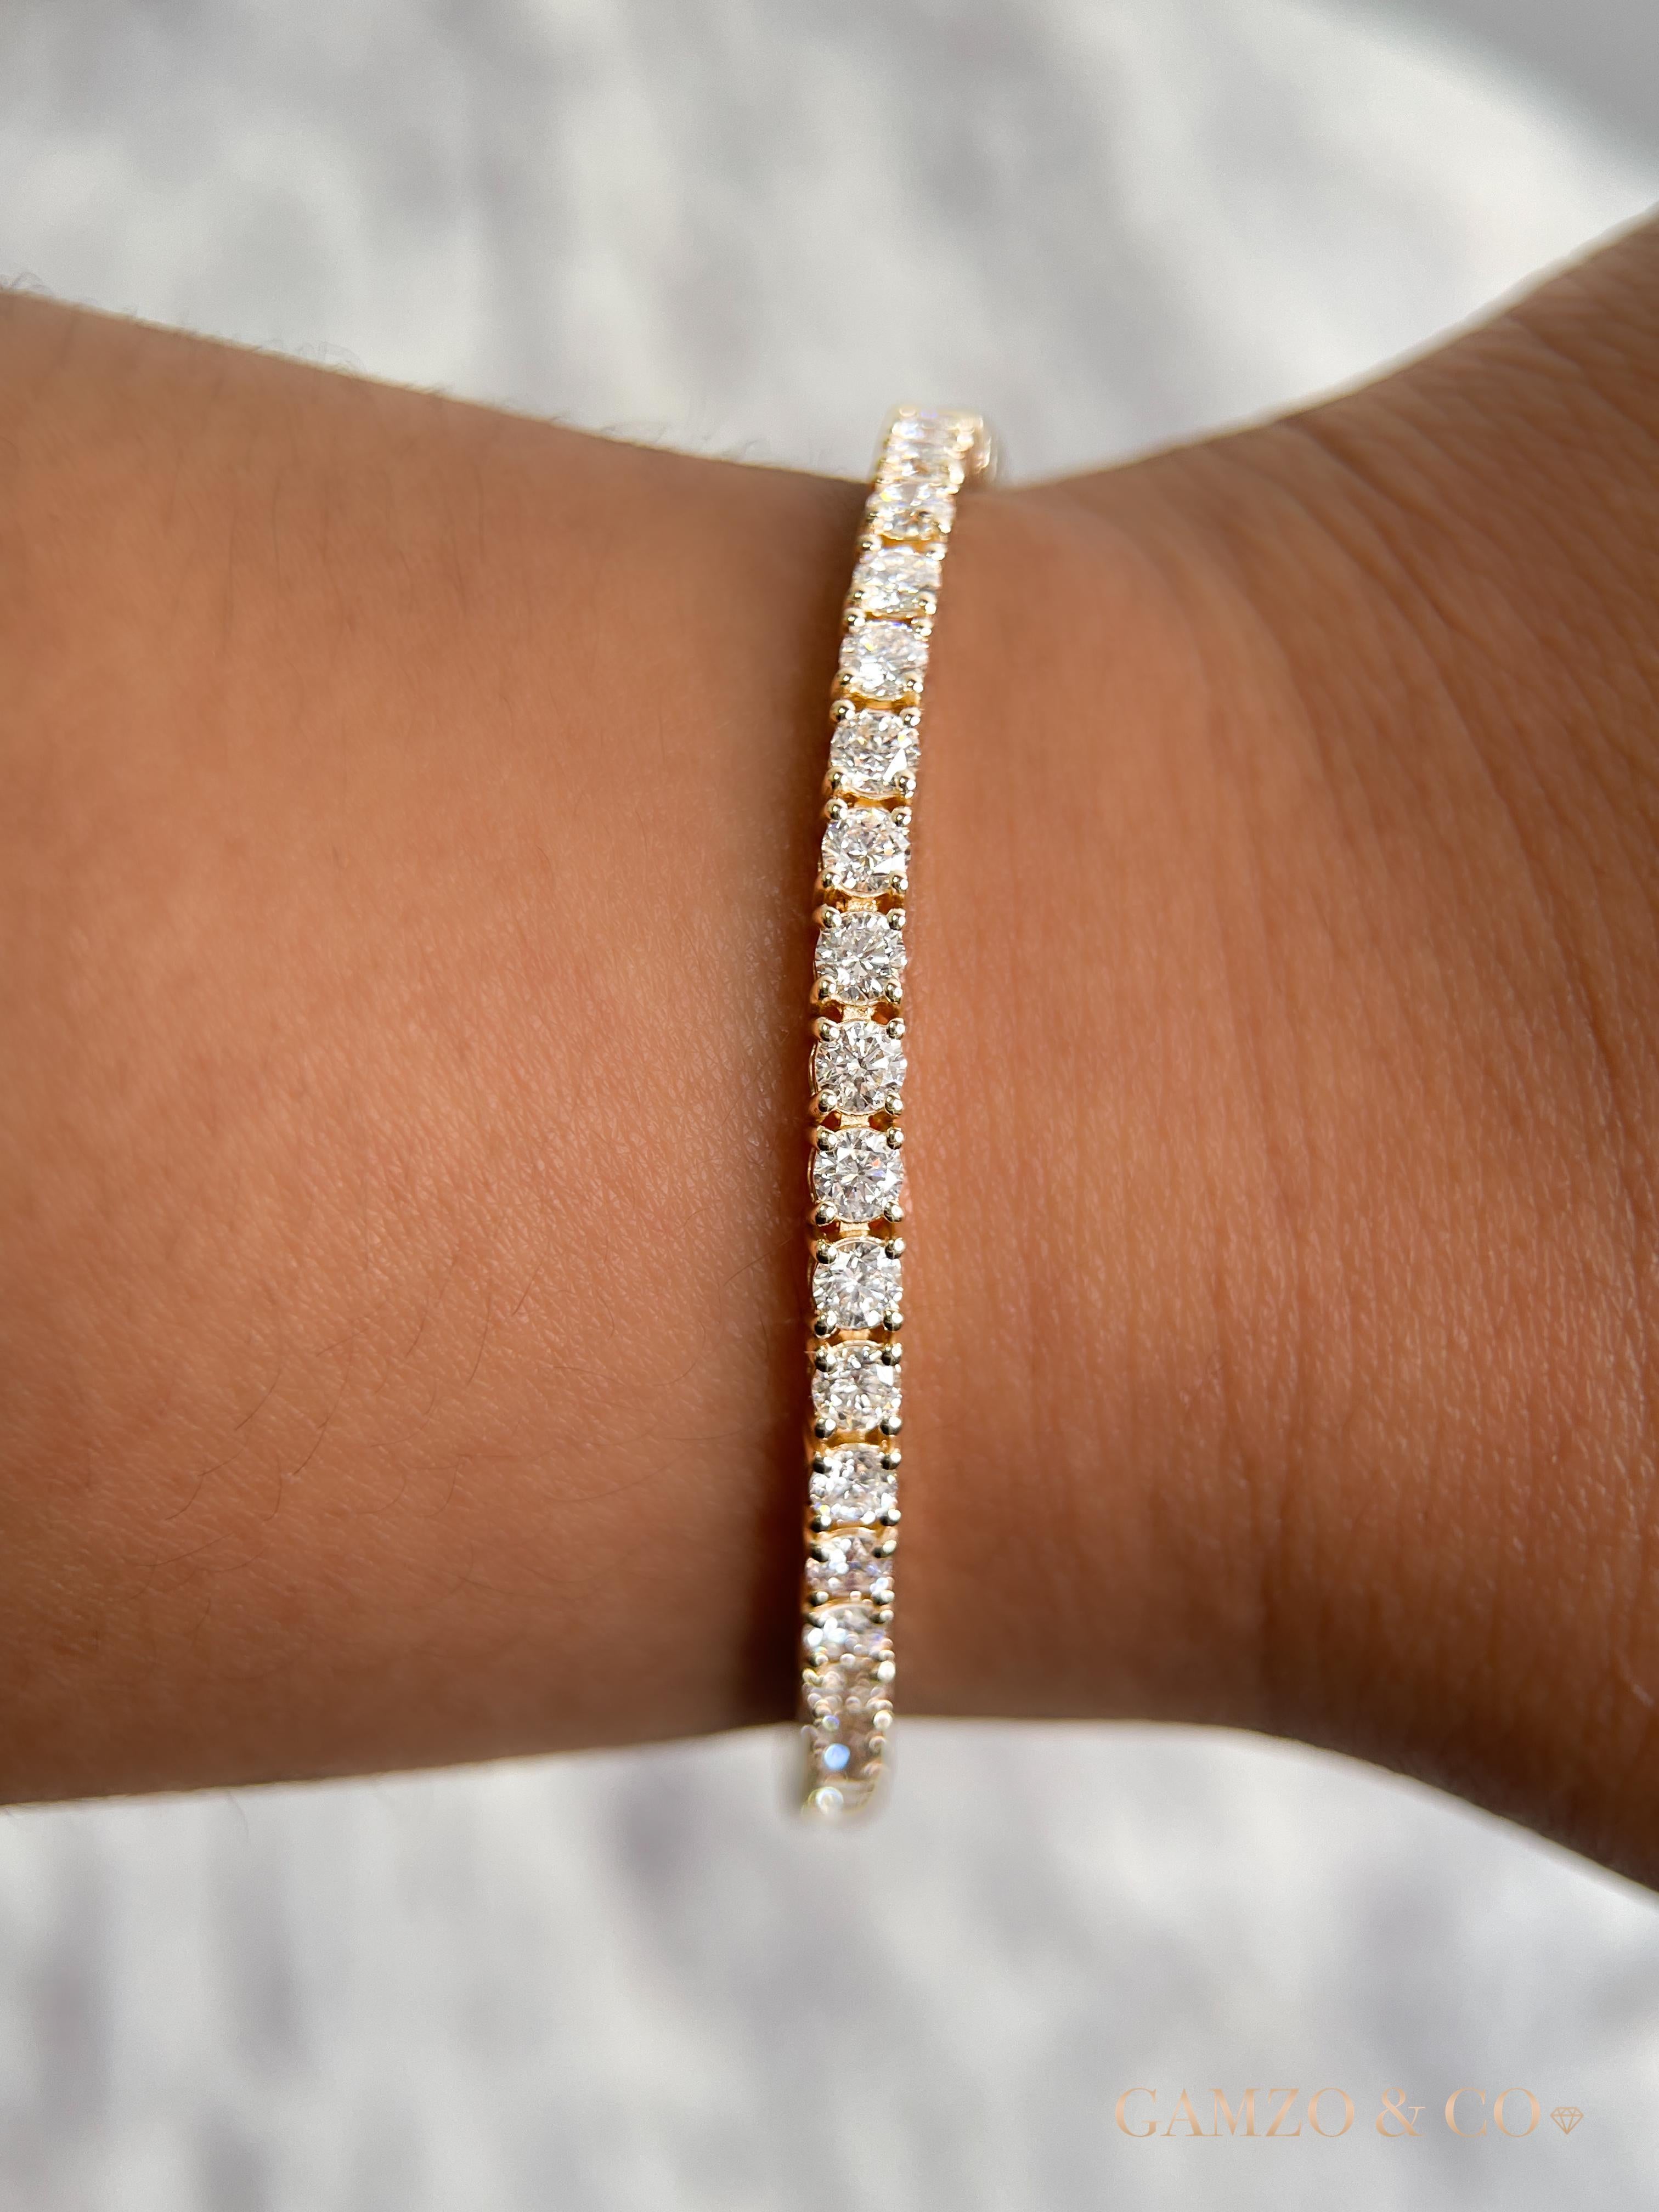 5 carat tennis bracelet on wrist